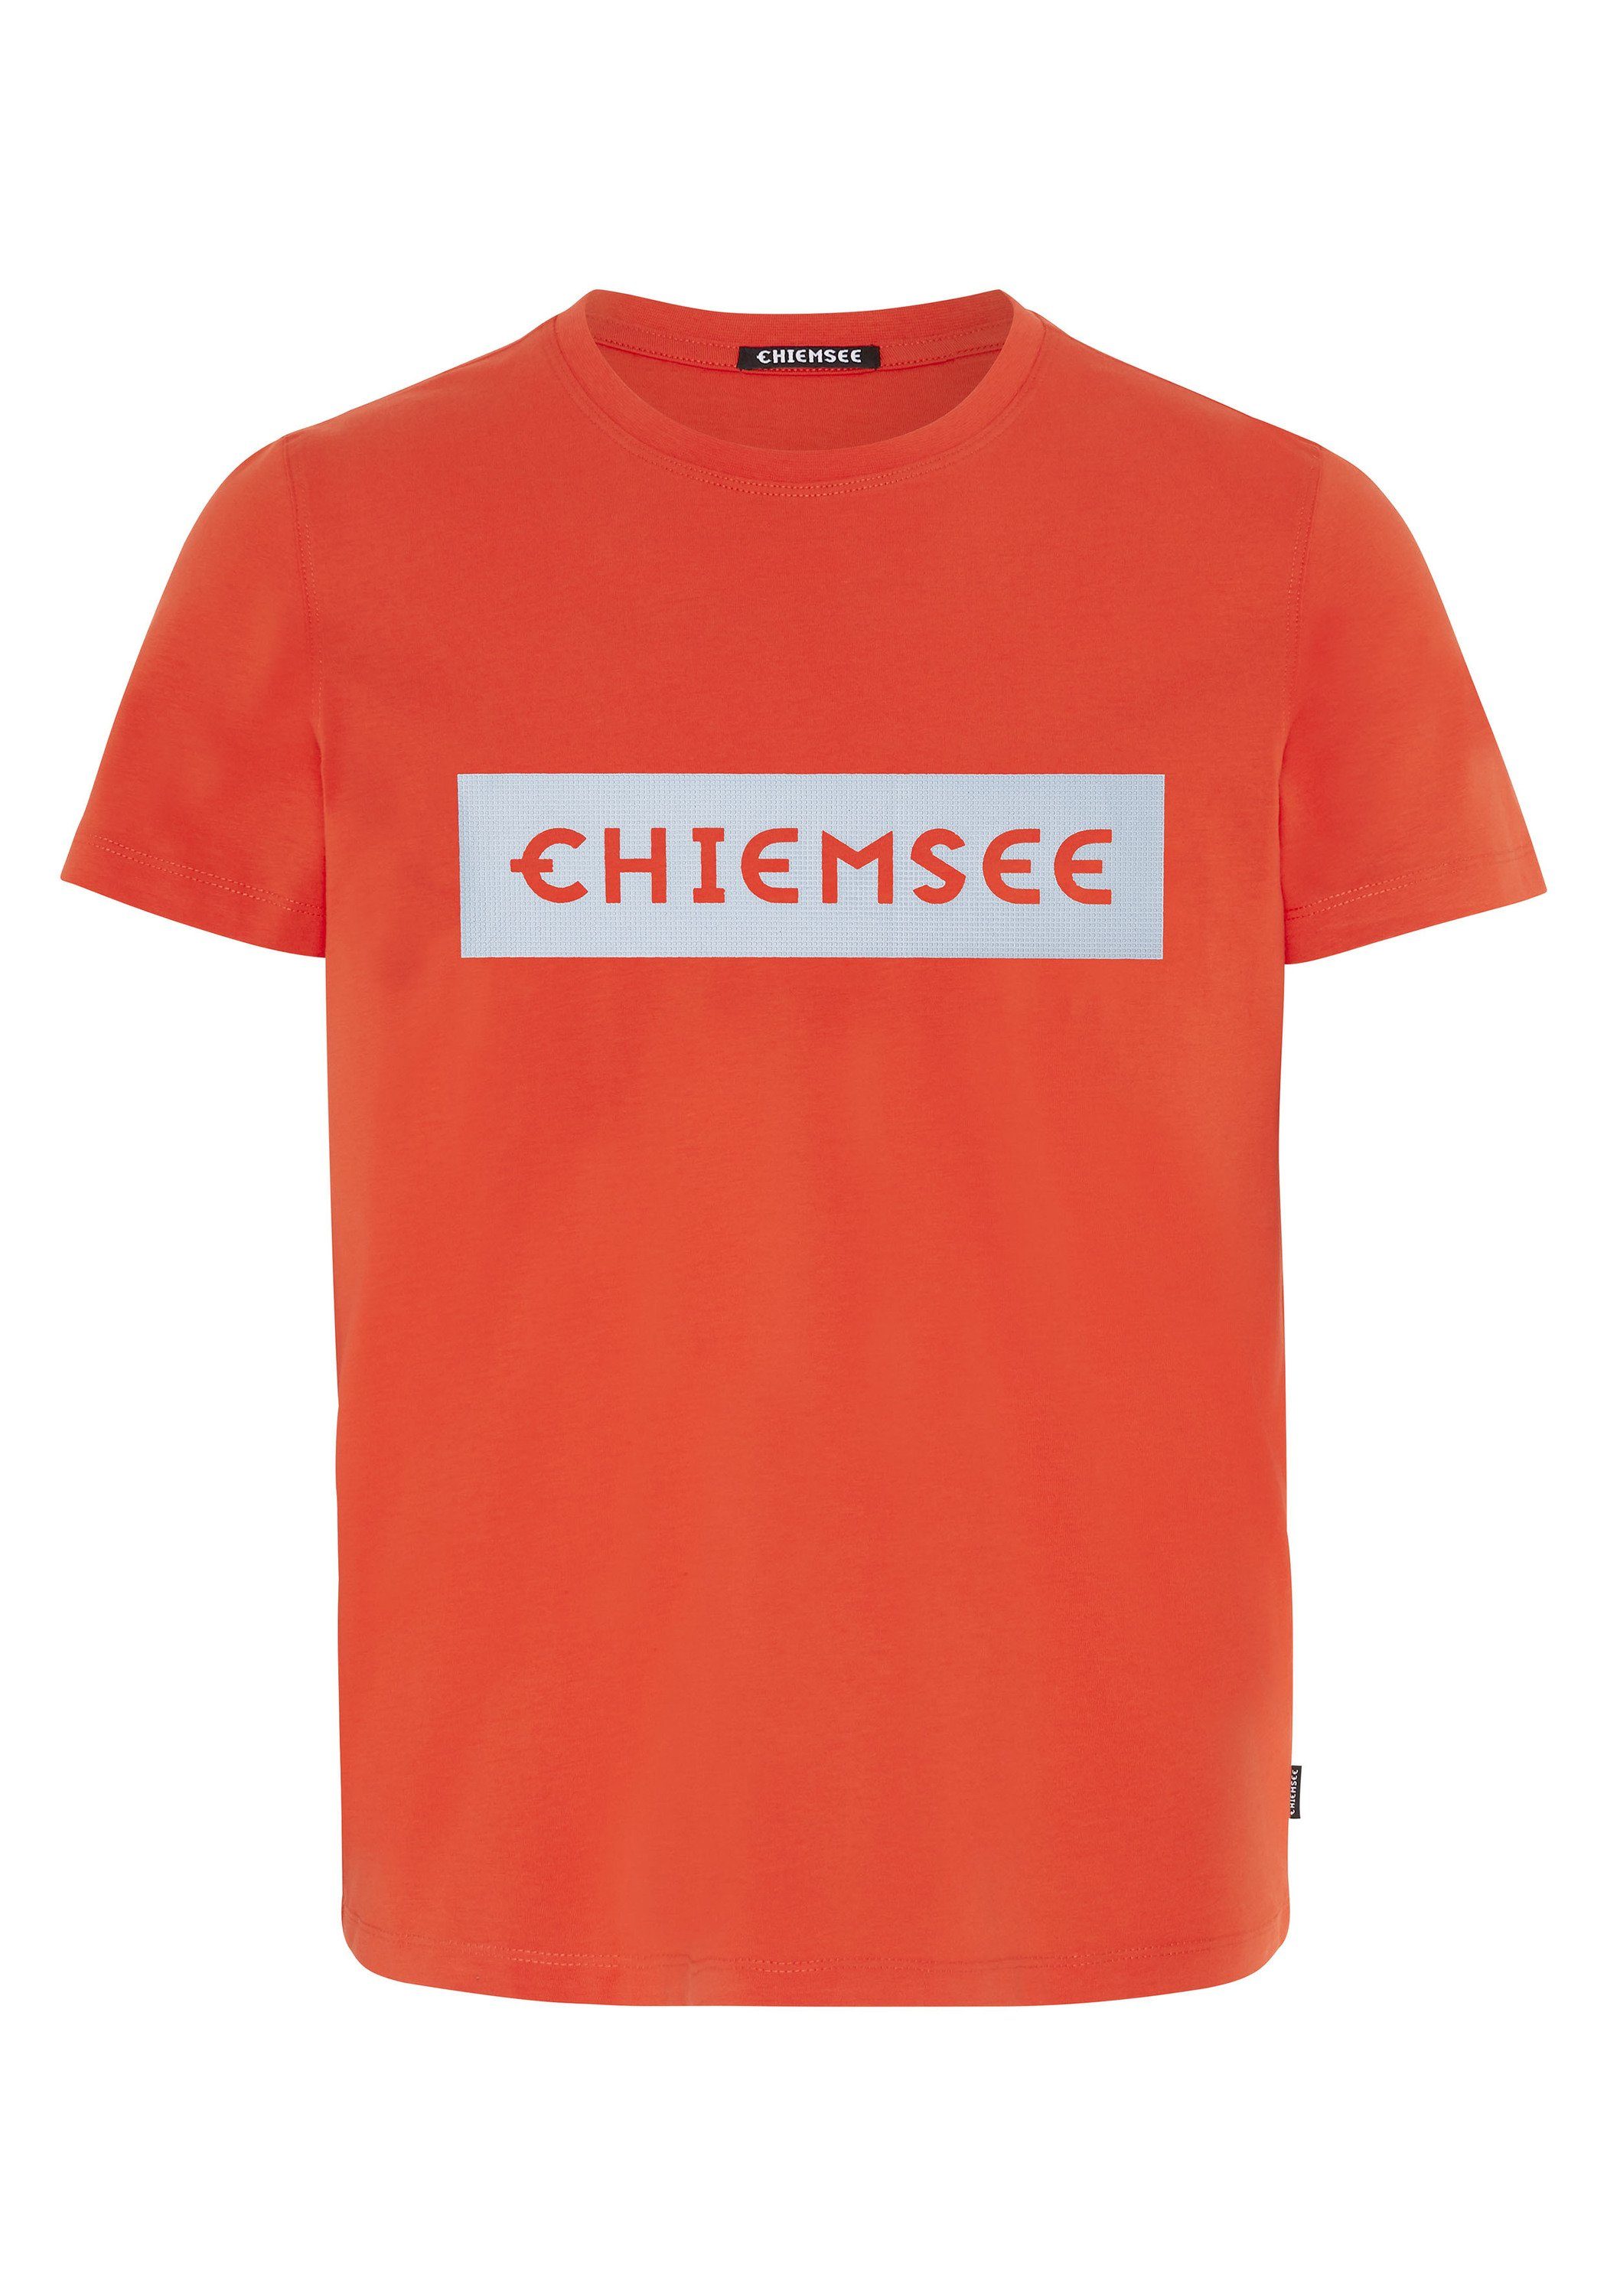 Chiemsee Print-Shirt T-Shirt mit plakativem Tomato 1 Markenschriftzug Chery